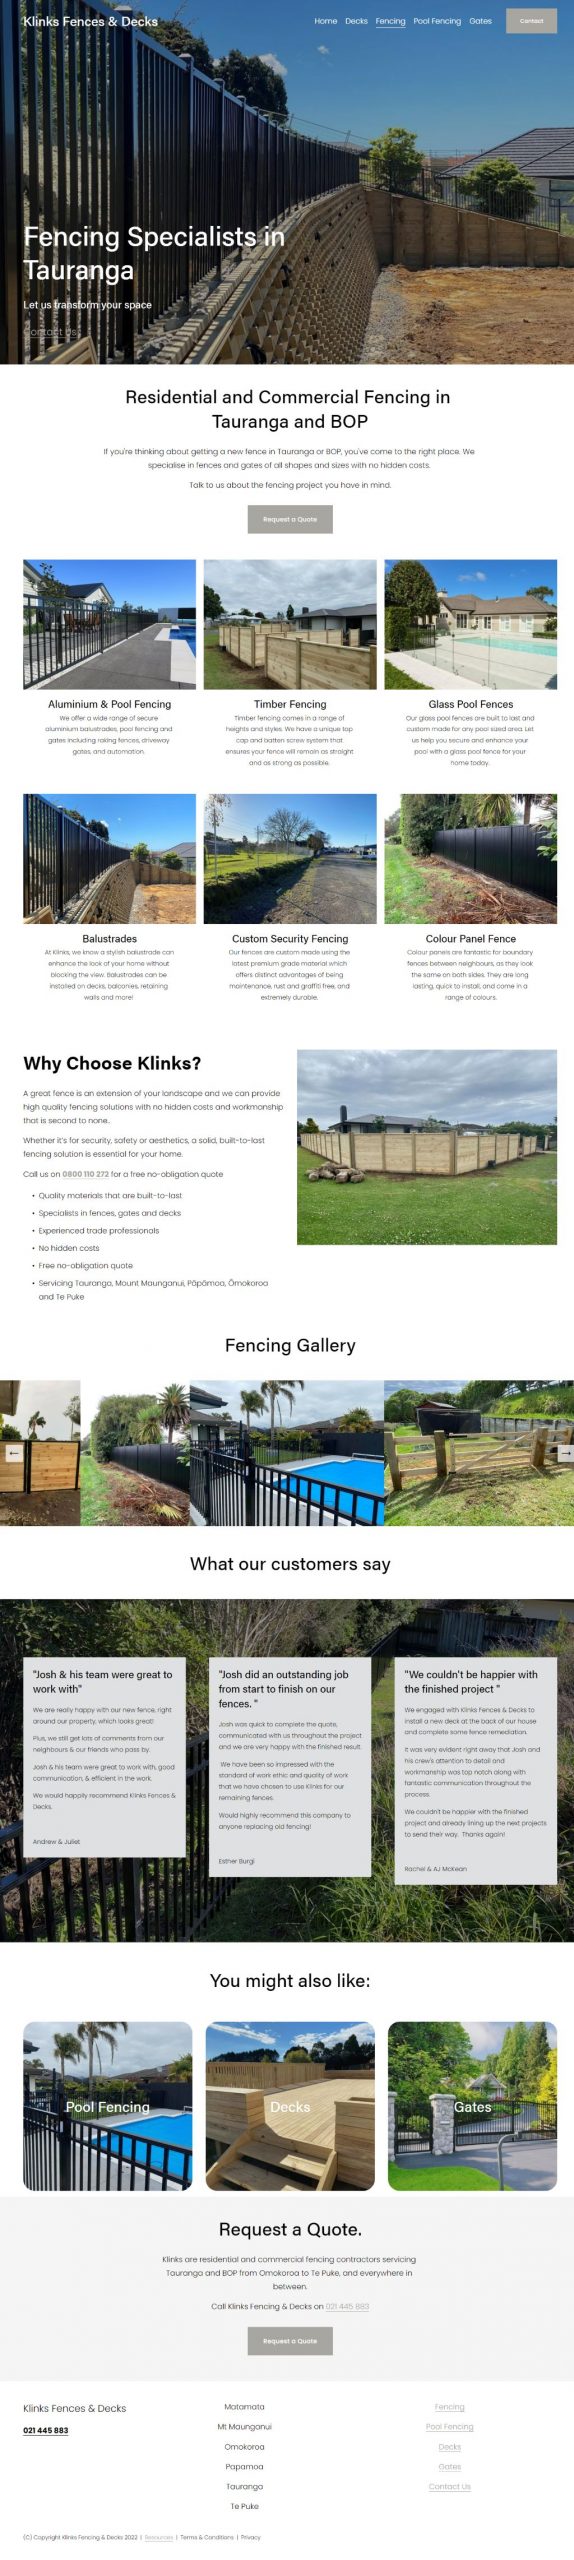 Klinks fencing Tauranga - New Fencing Page